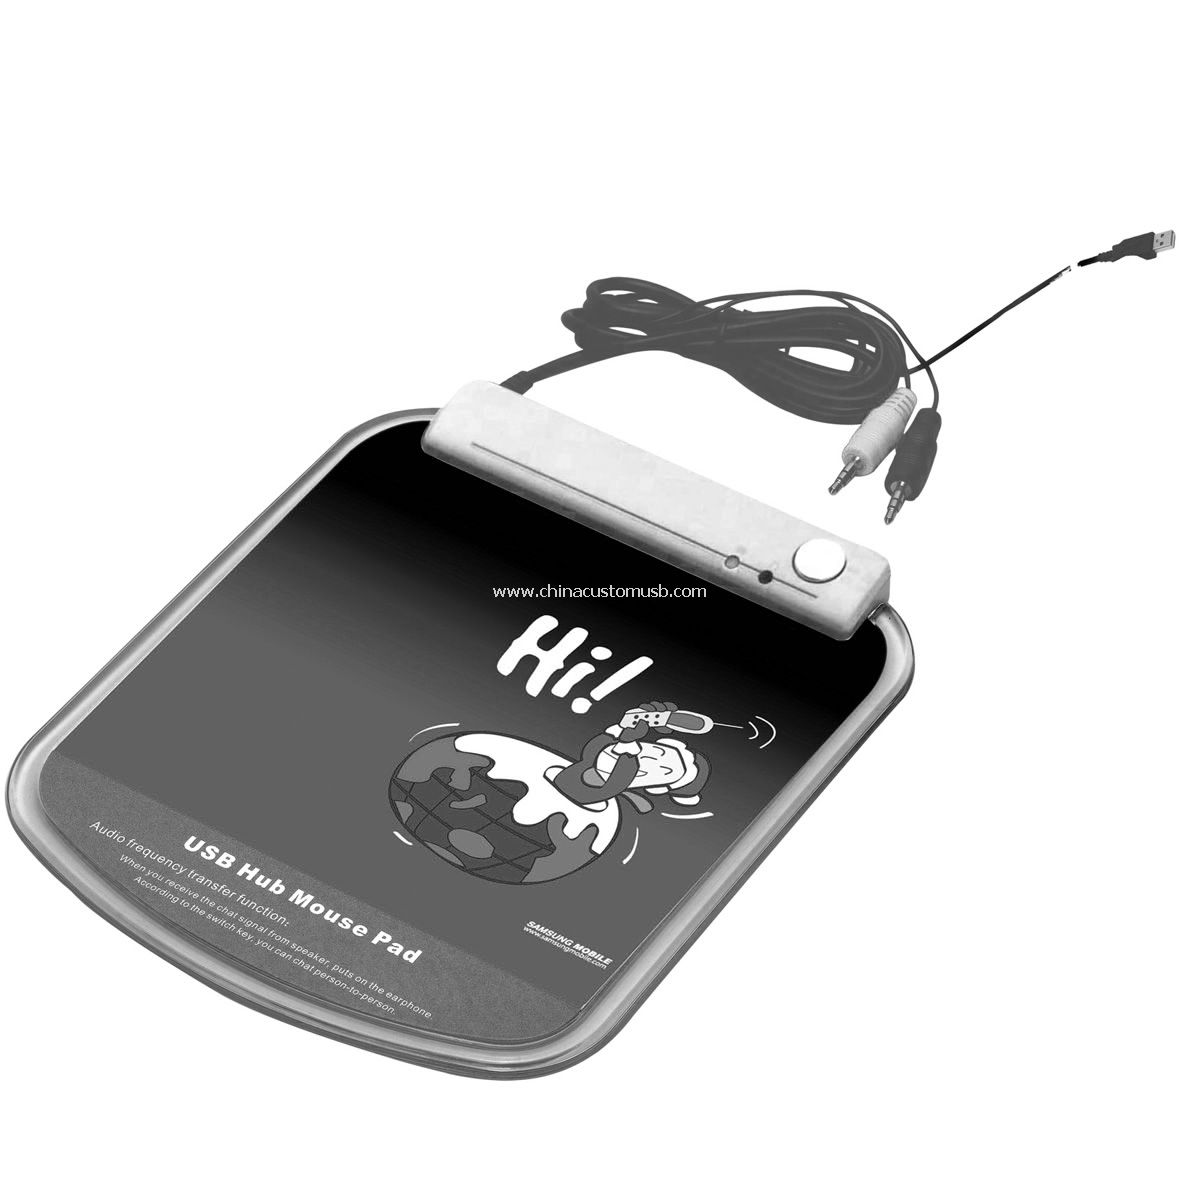 Hub USB mouse pad-uri